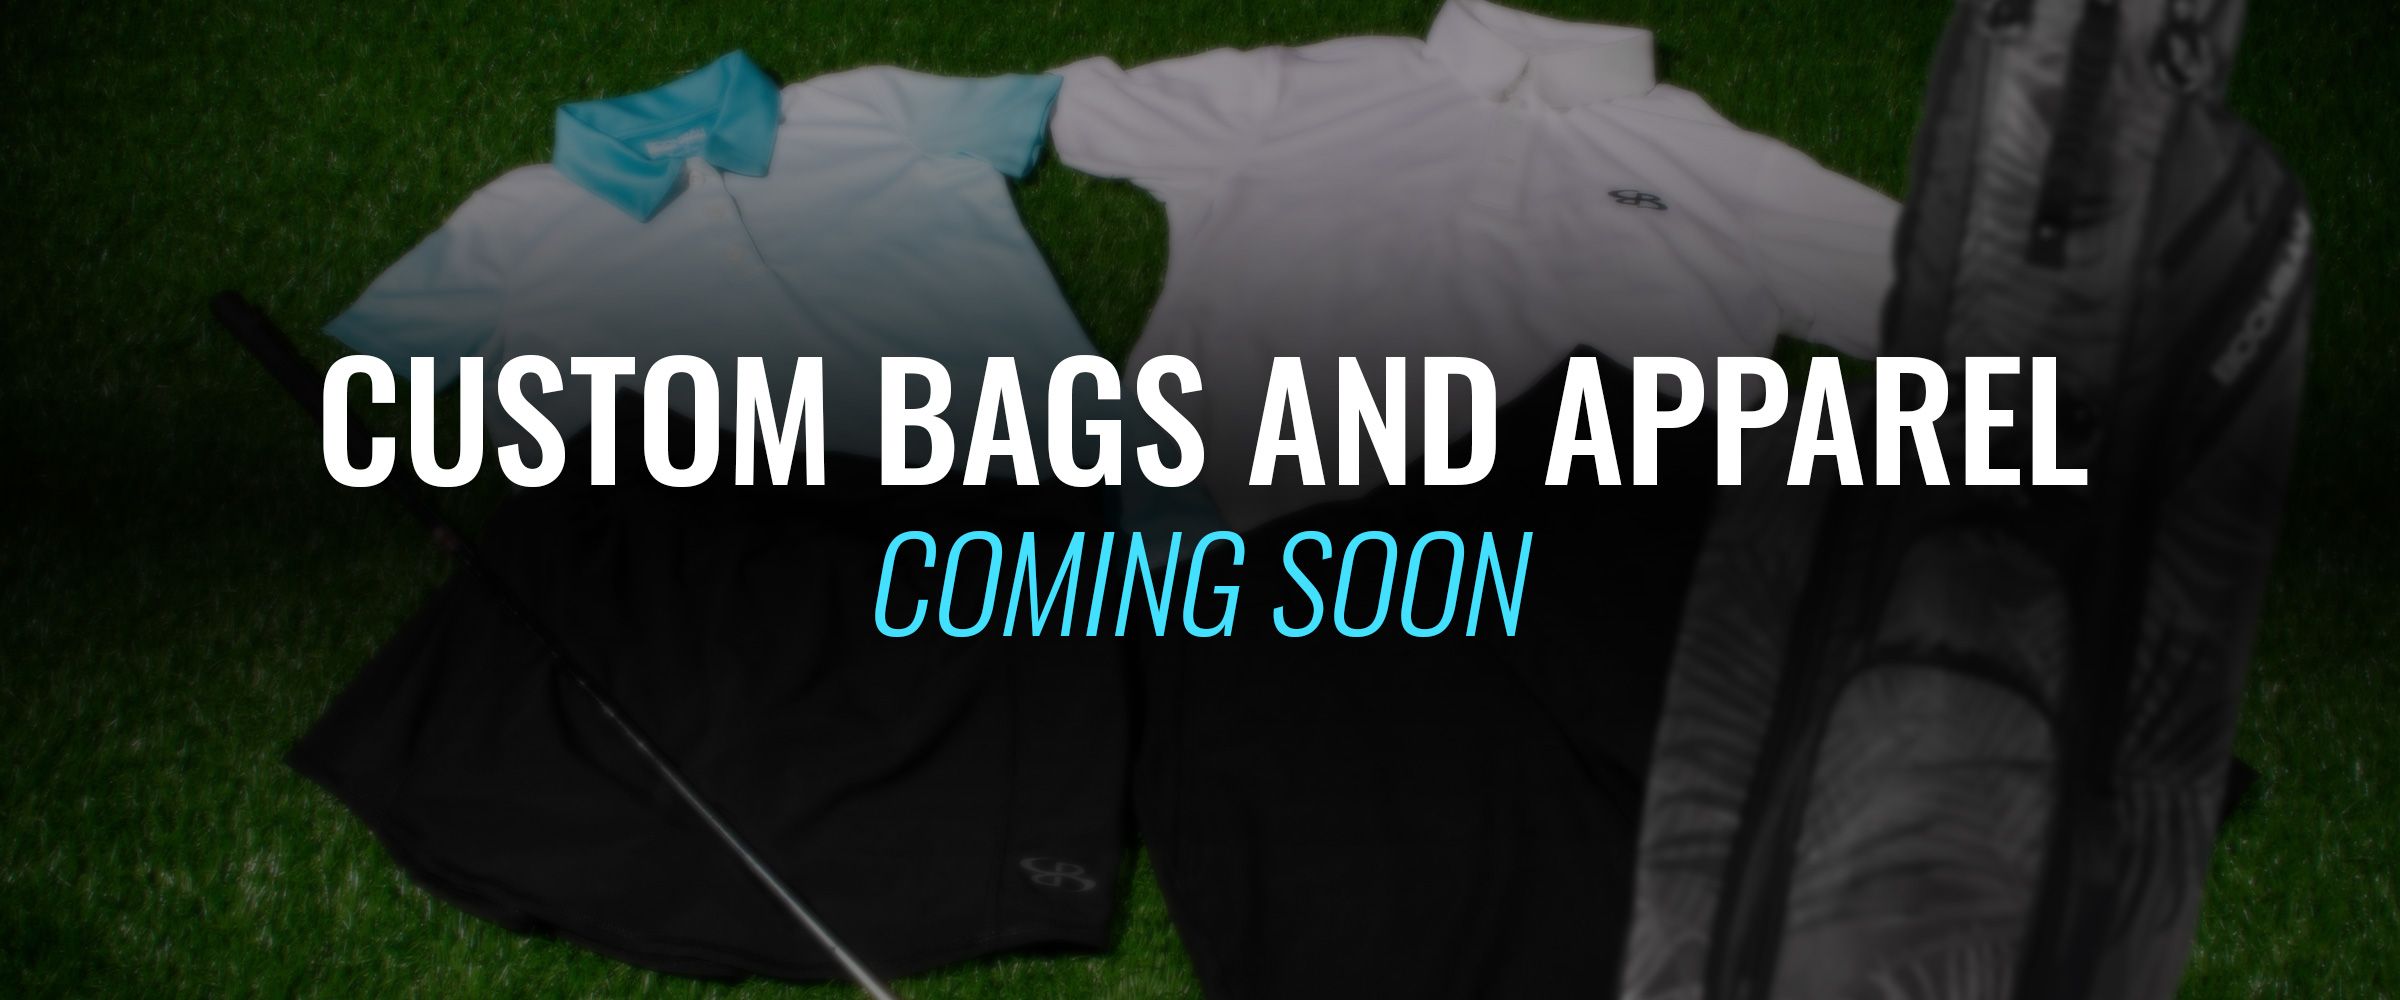 Custom Apparel and Bags - Coming Soon